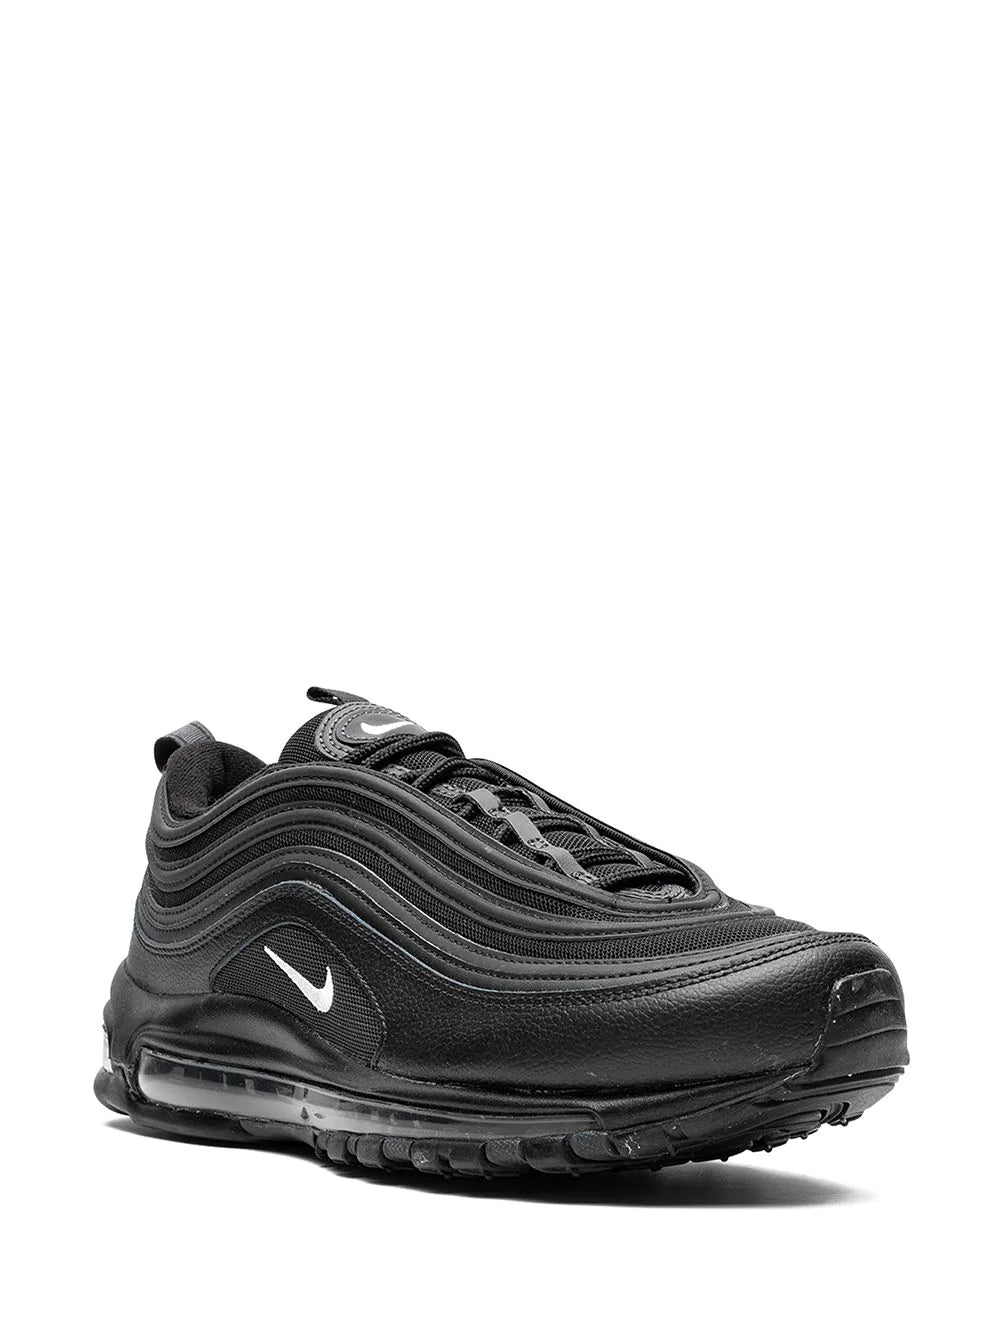 Nike Airmax 97 Black